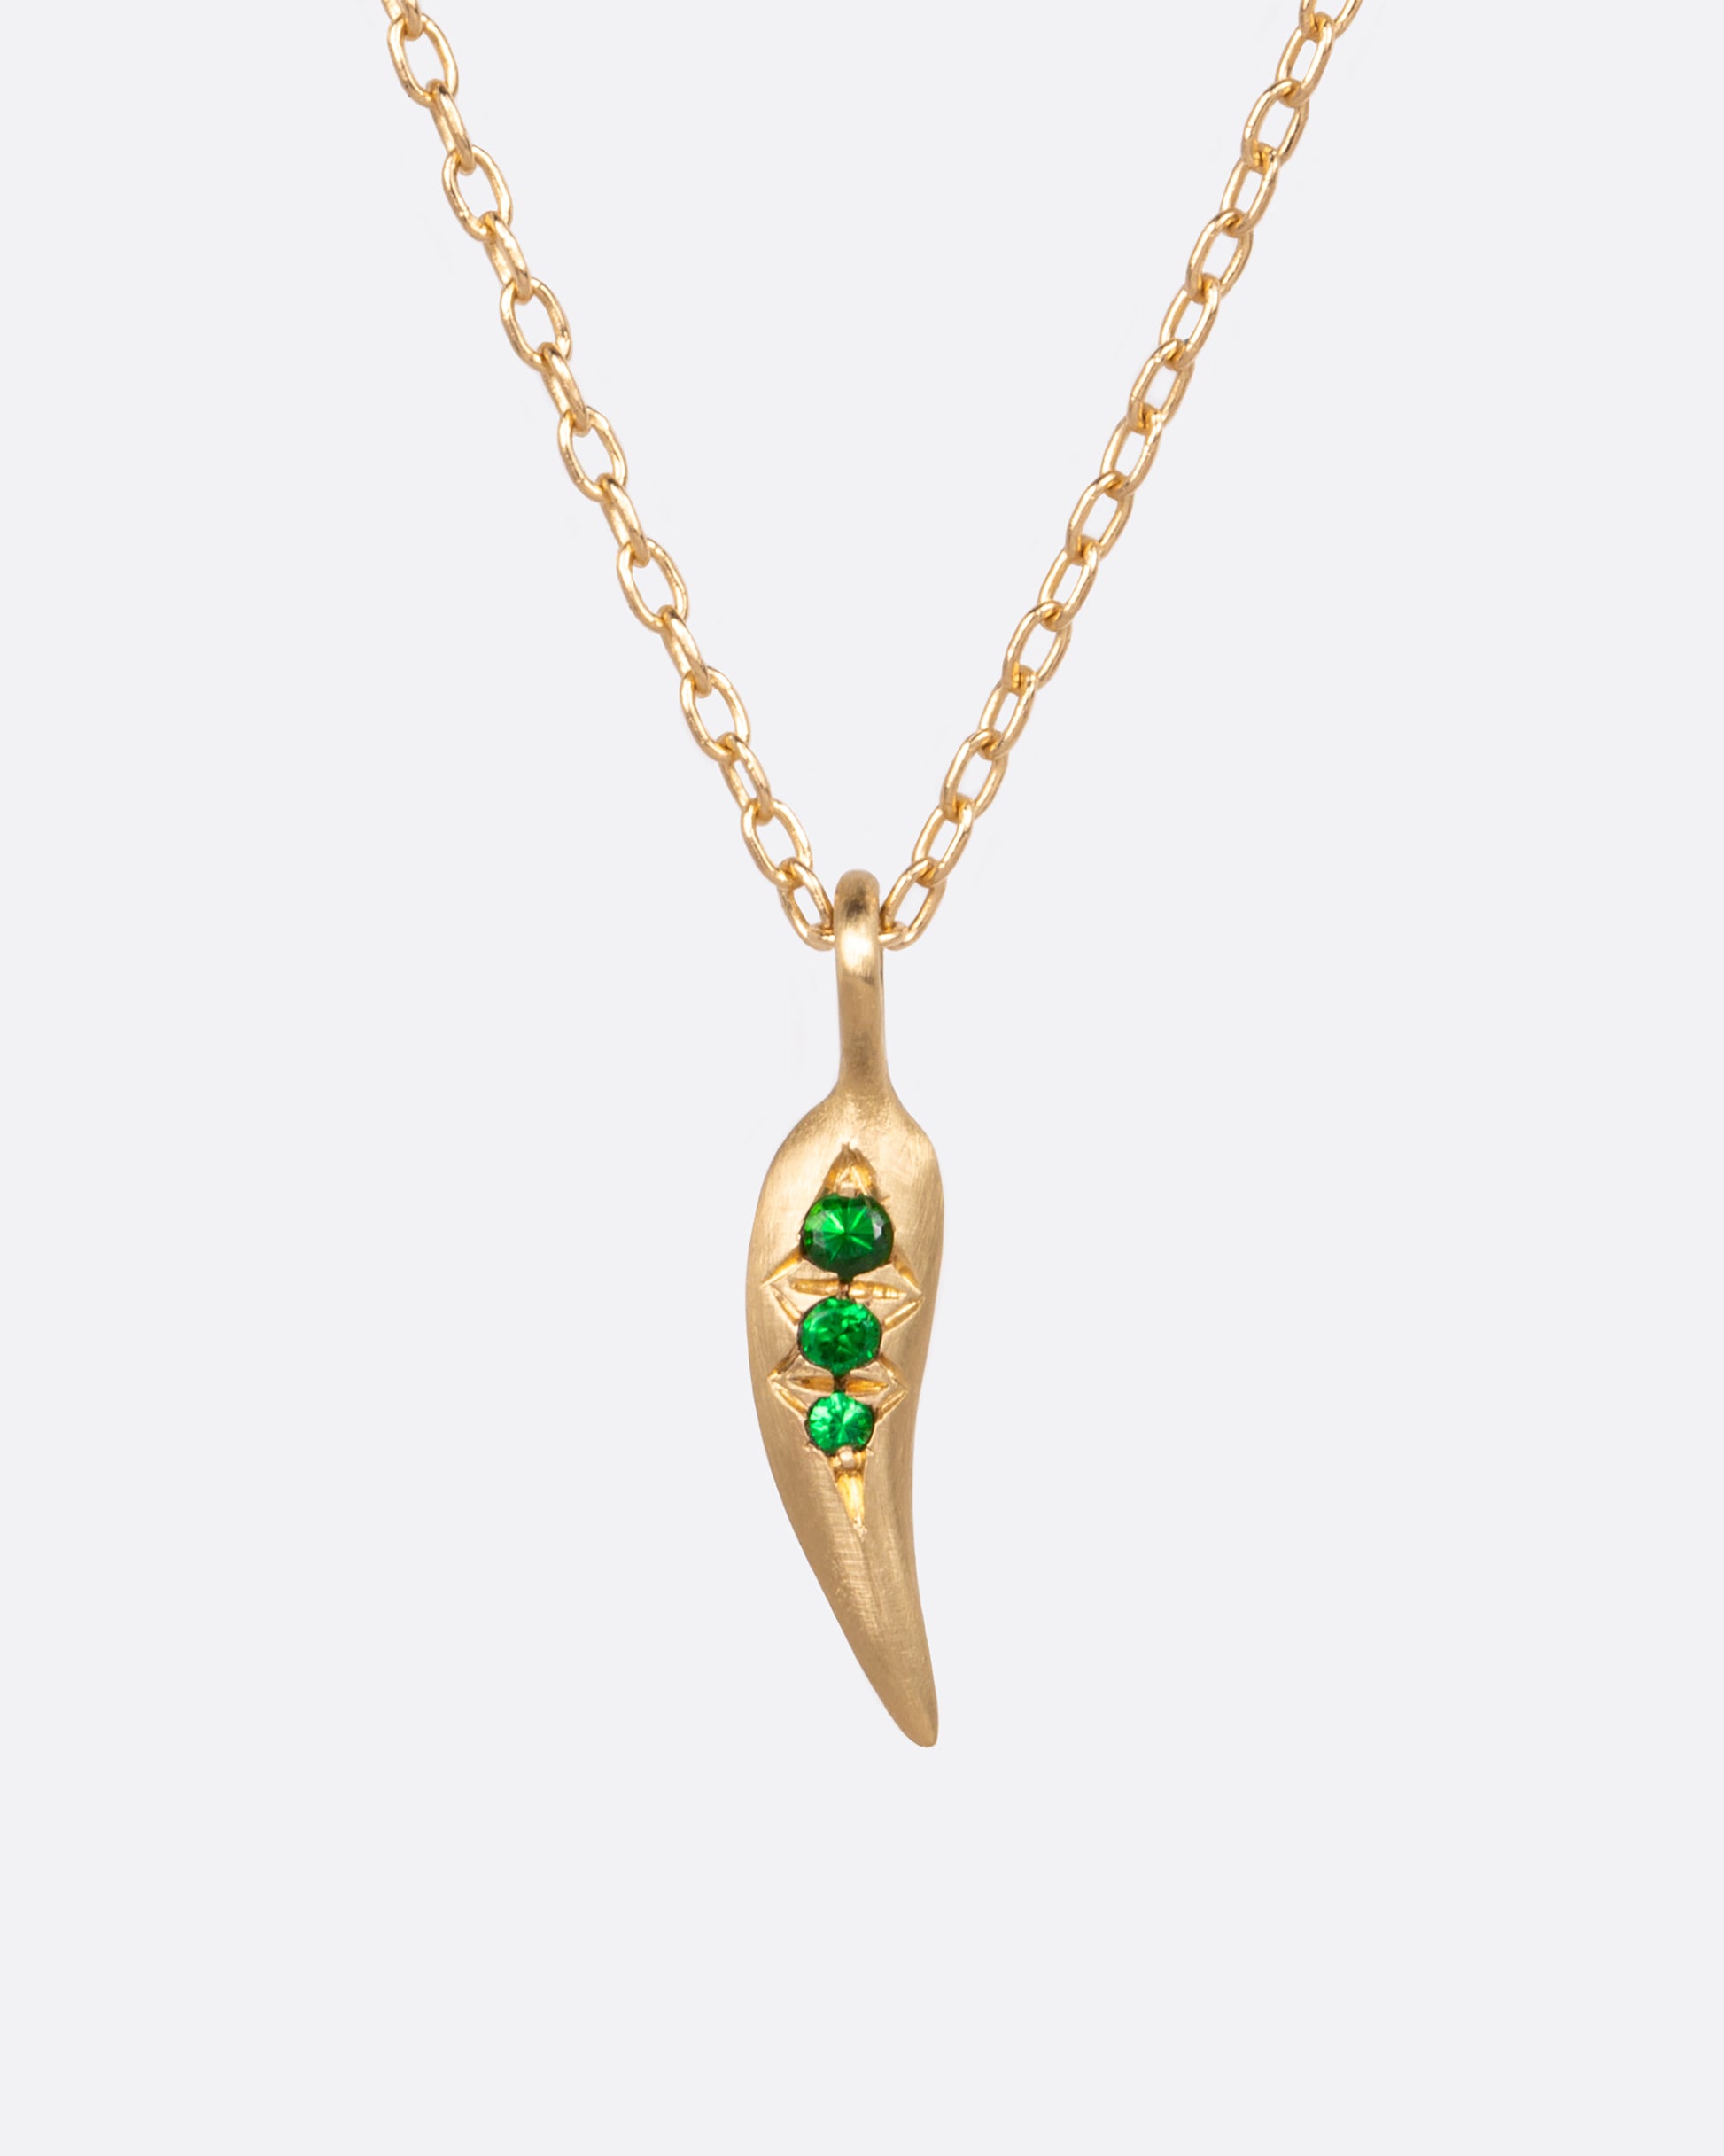 A small chili pepper shaped pendant with three vibrant green tsavorite garnets.